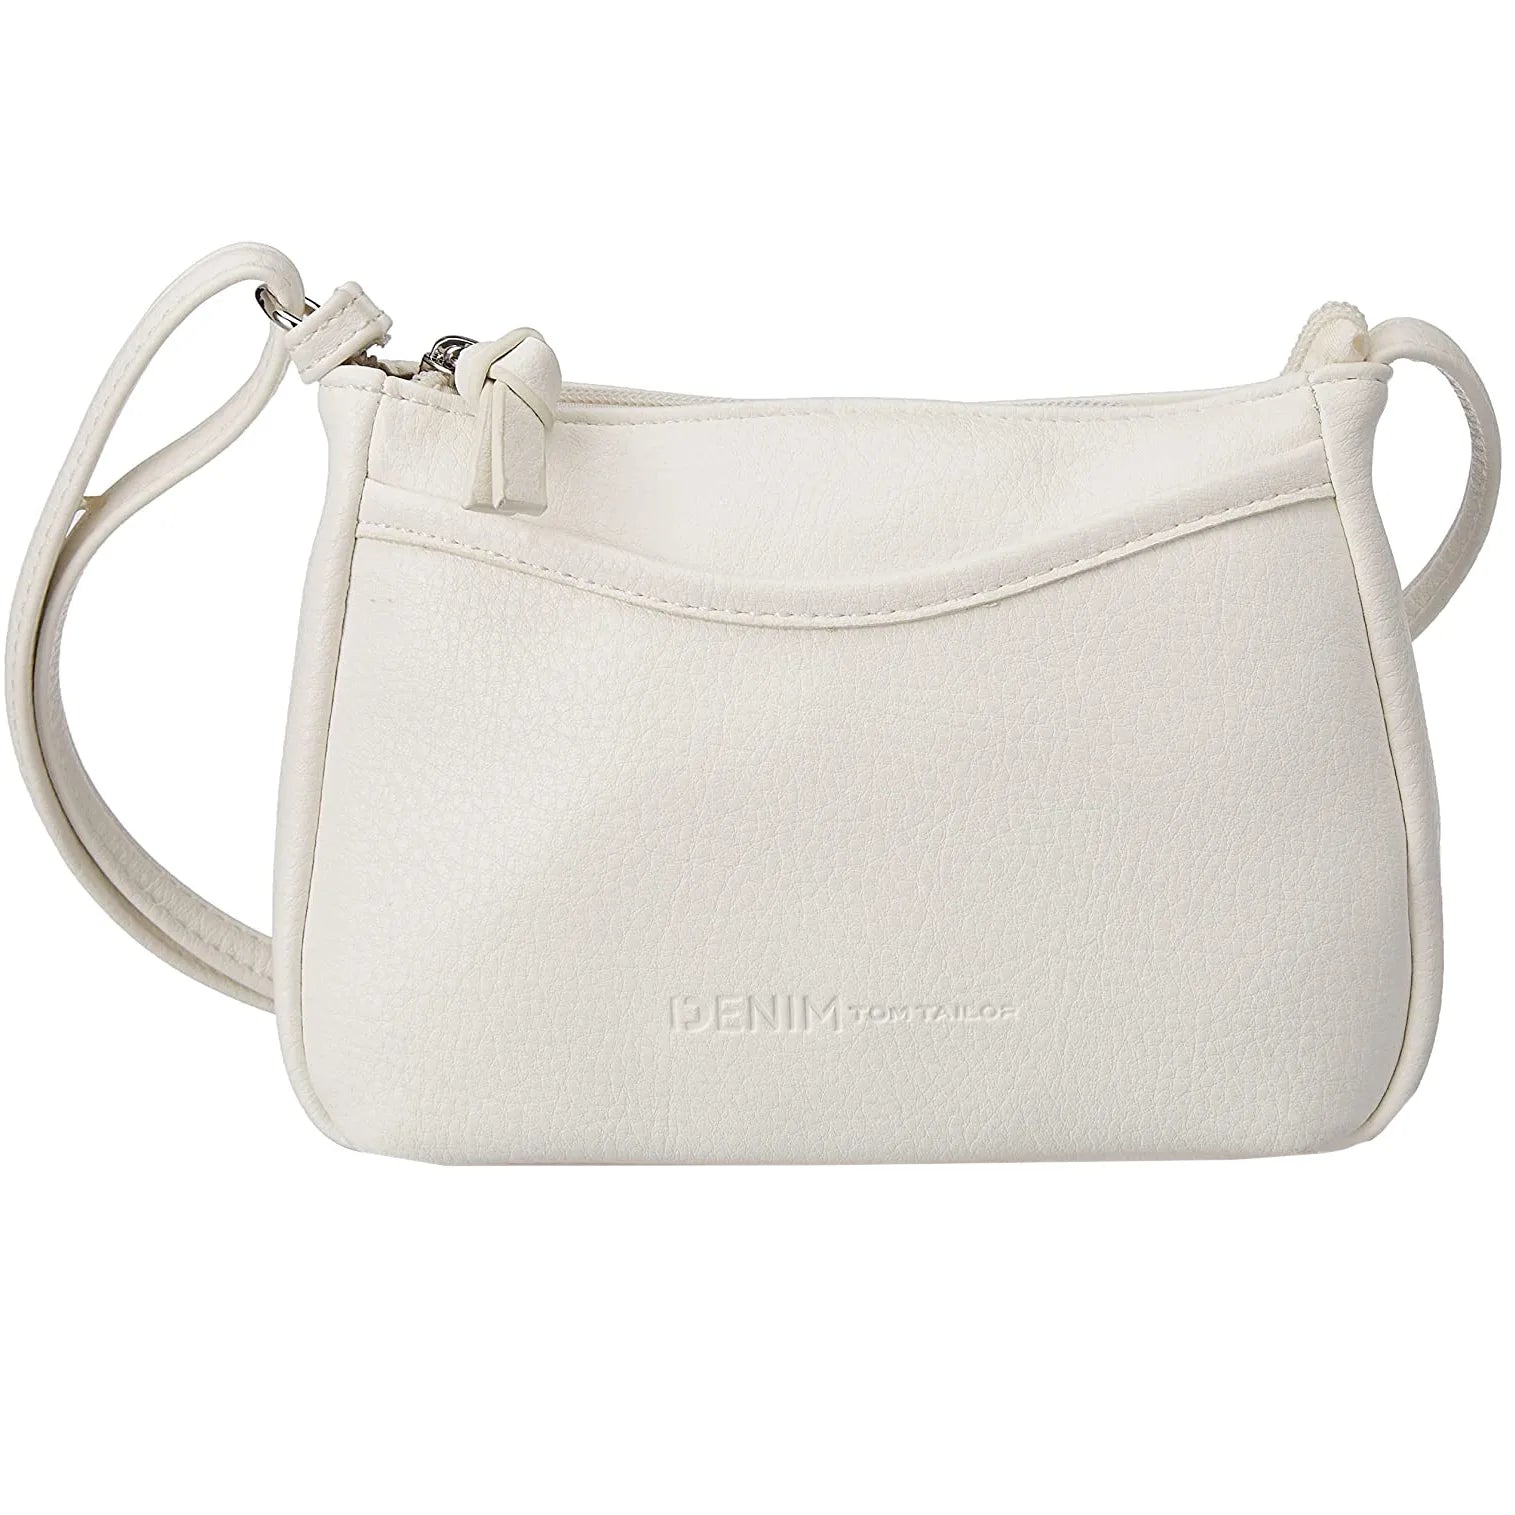 Tom Tailor Bags Cilia Handtasche 20 cm - white